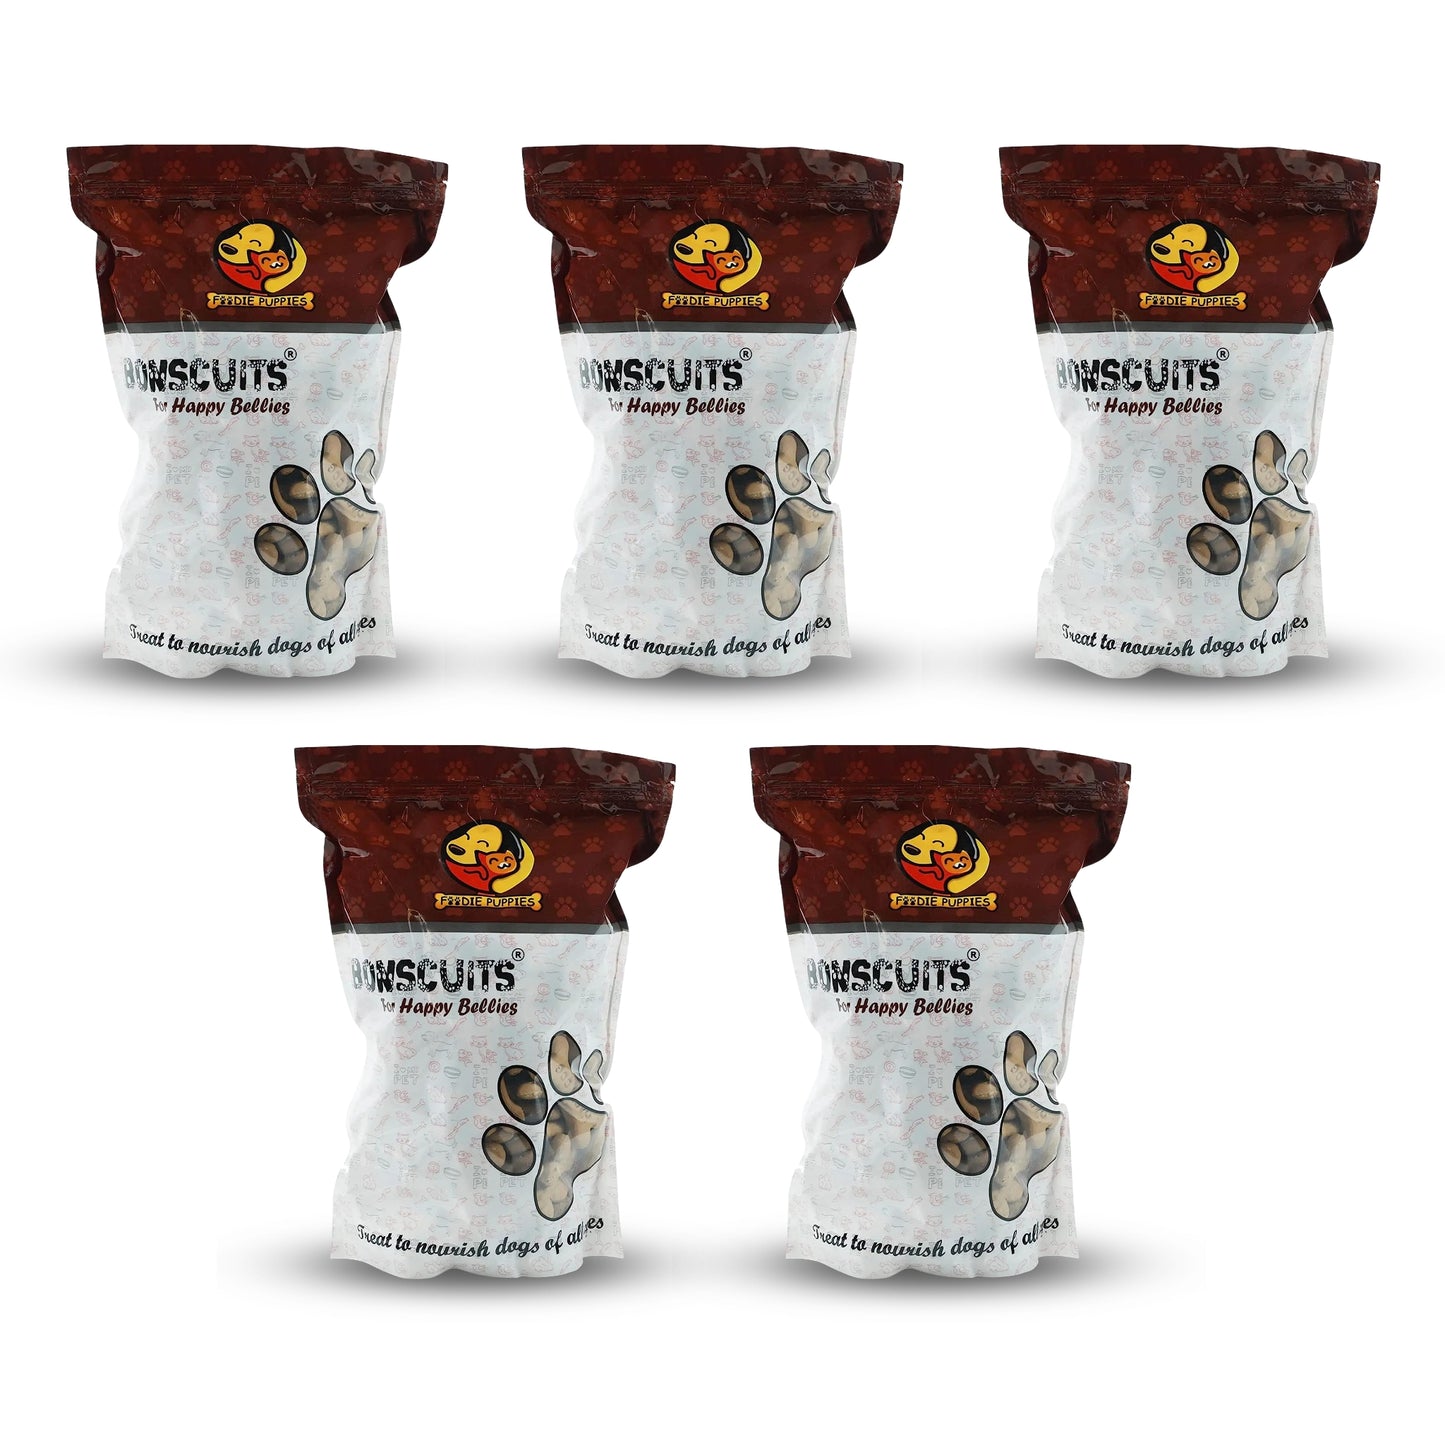 Foodie Puppies Crunchy Chicken Biscuits for Dogs & Puppies - 5Kg